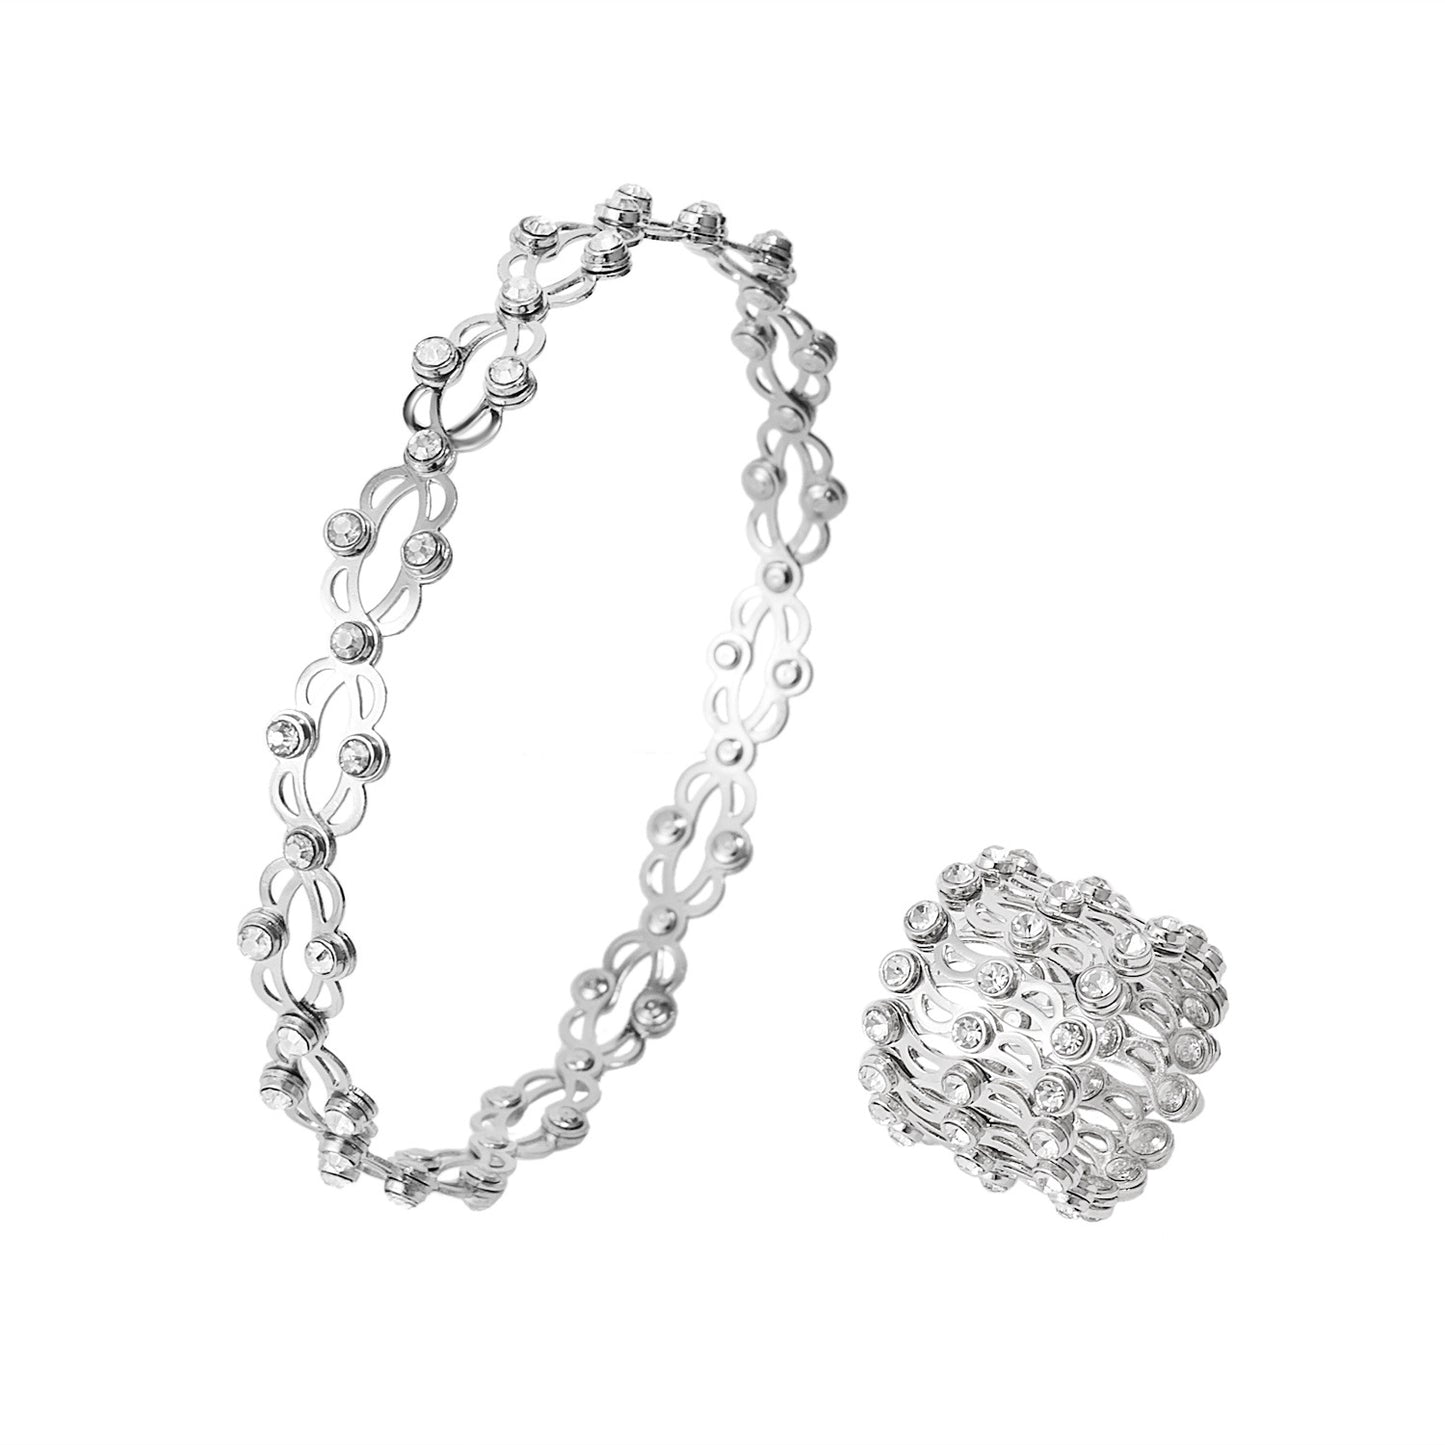 2 In 1 Folding Retractable Rings Bracelet Magic Rhinestone Rings Deformable Bracelet Women Ins Style Adjustable Fashion Jewelry